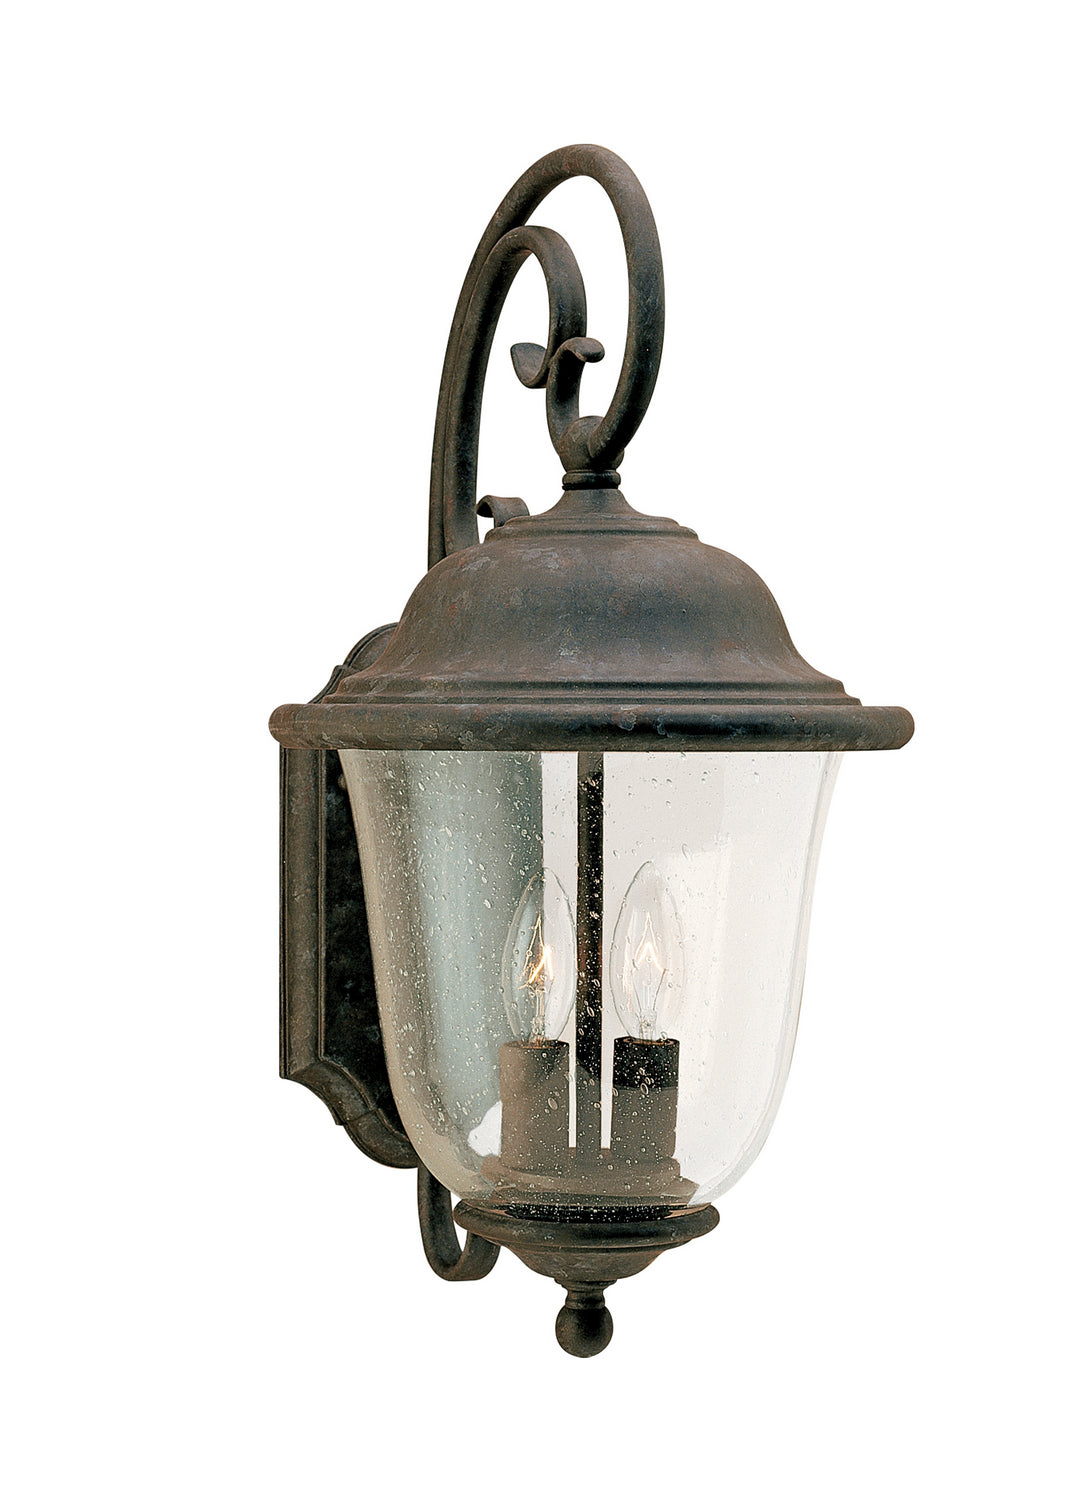 Generation Lighting Canada. - Two Light Outdoor Wall Lantern - Trafalgar - Oxidized Bronze- Union Lighting Luminaires Decor